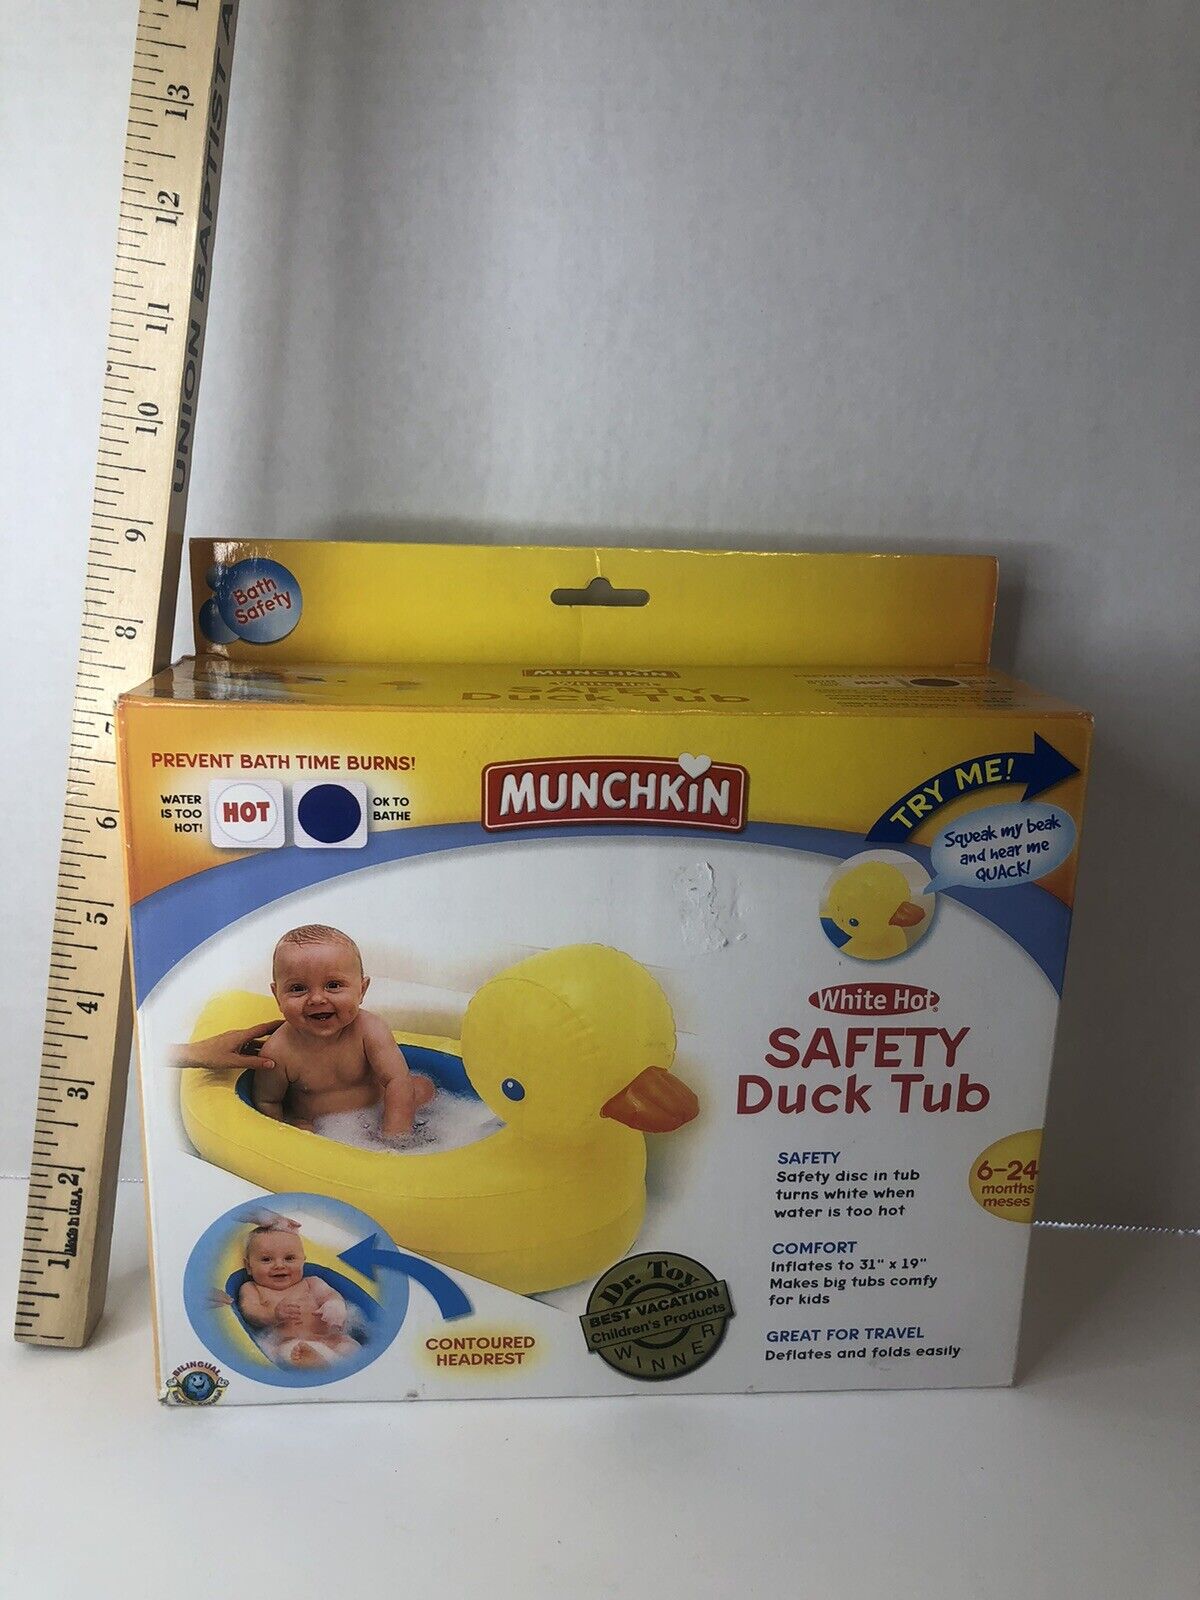 Munchkin Inflatable Safety Duck Tub Bath 31” X 19” 6-24 Months